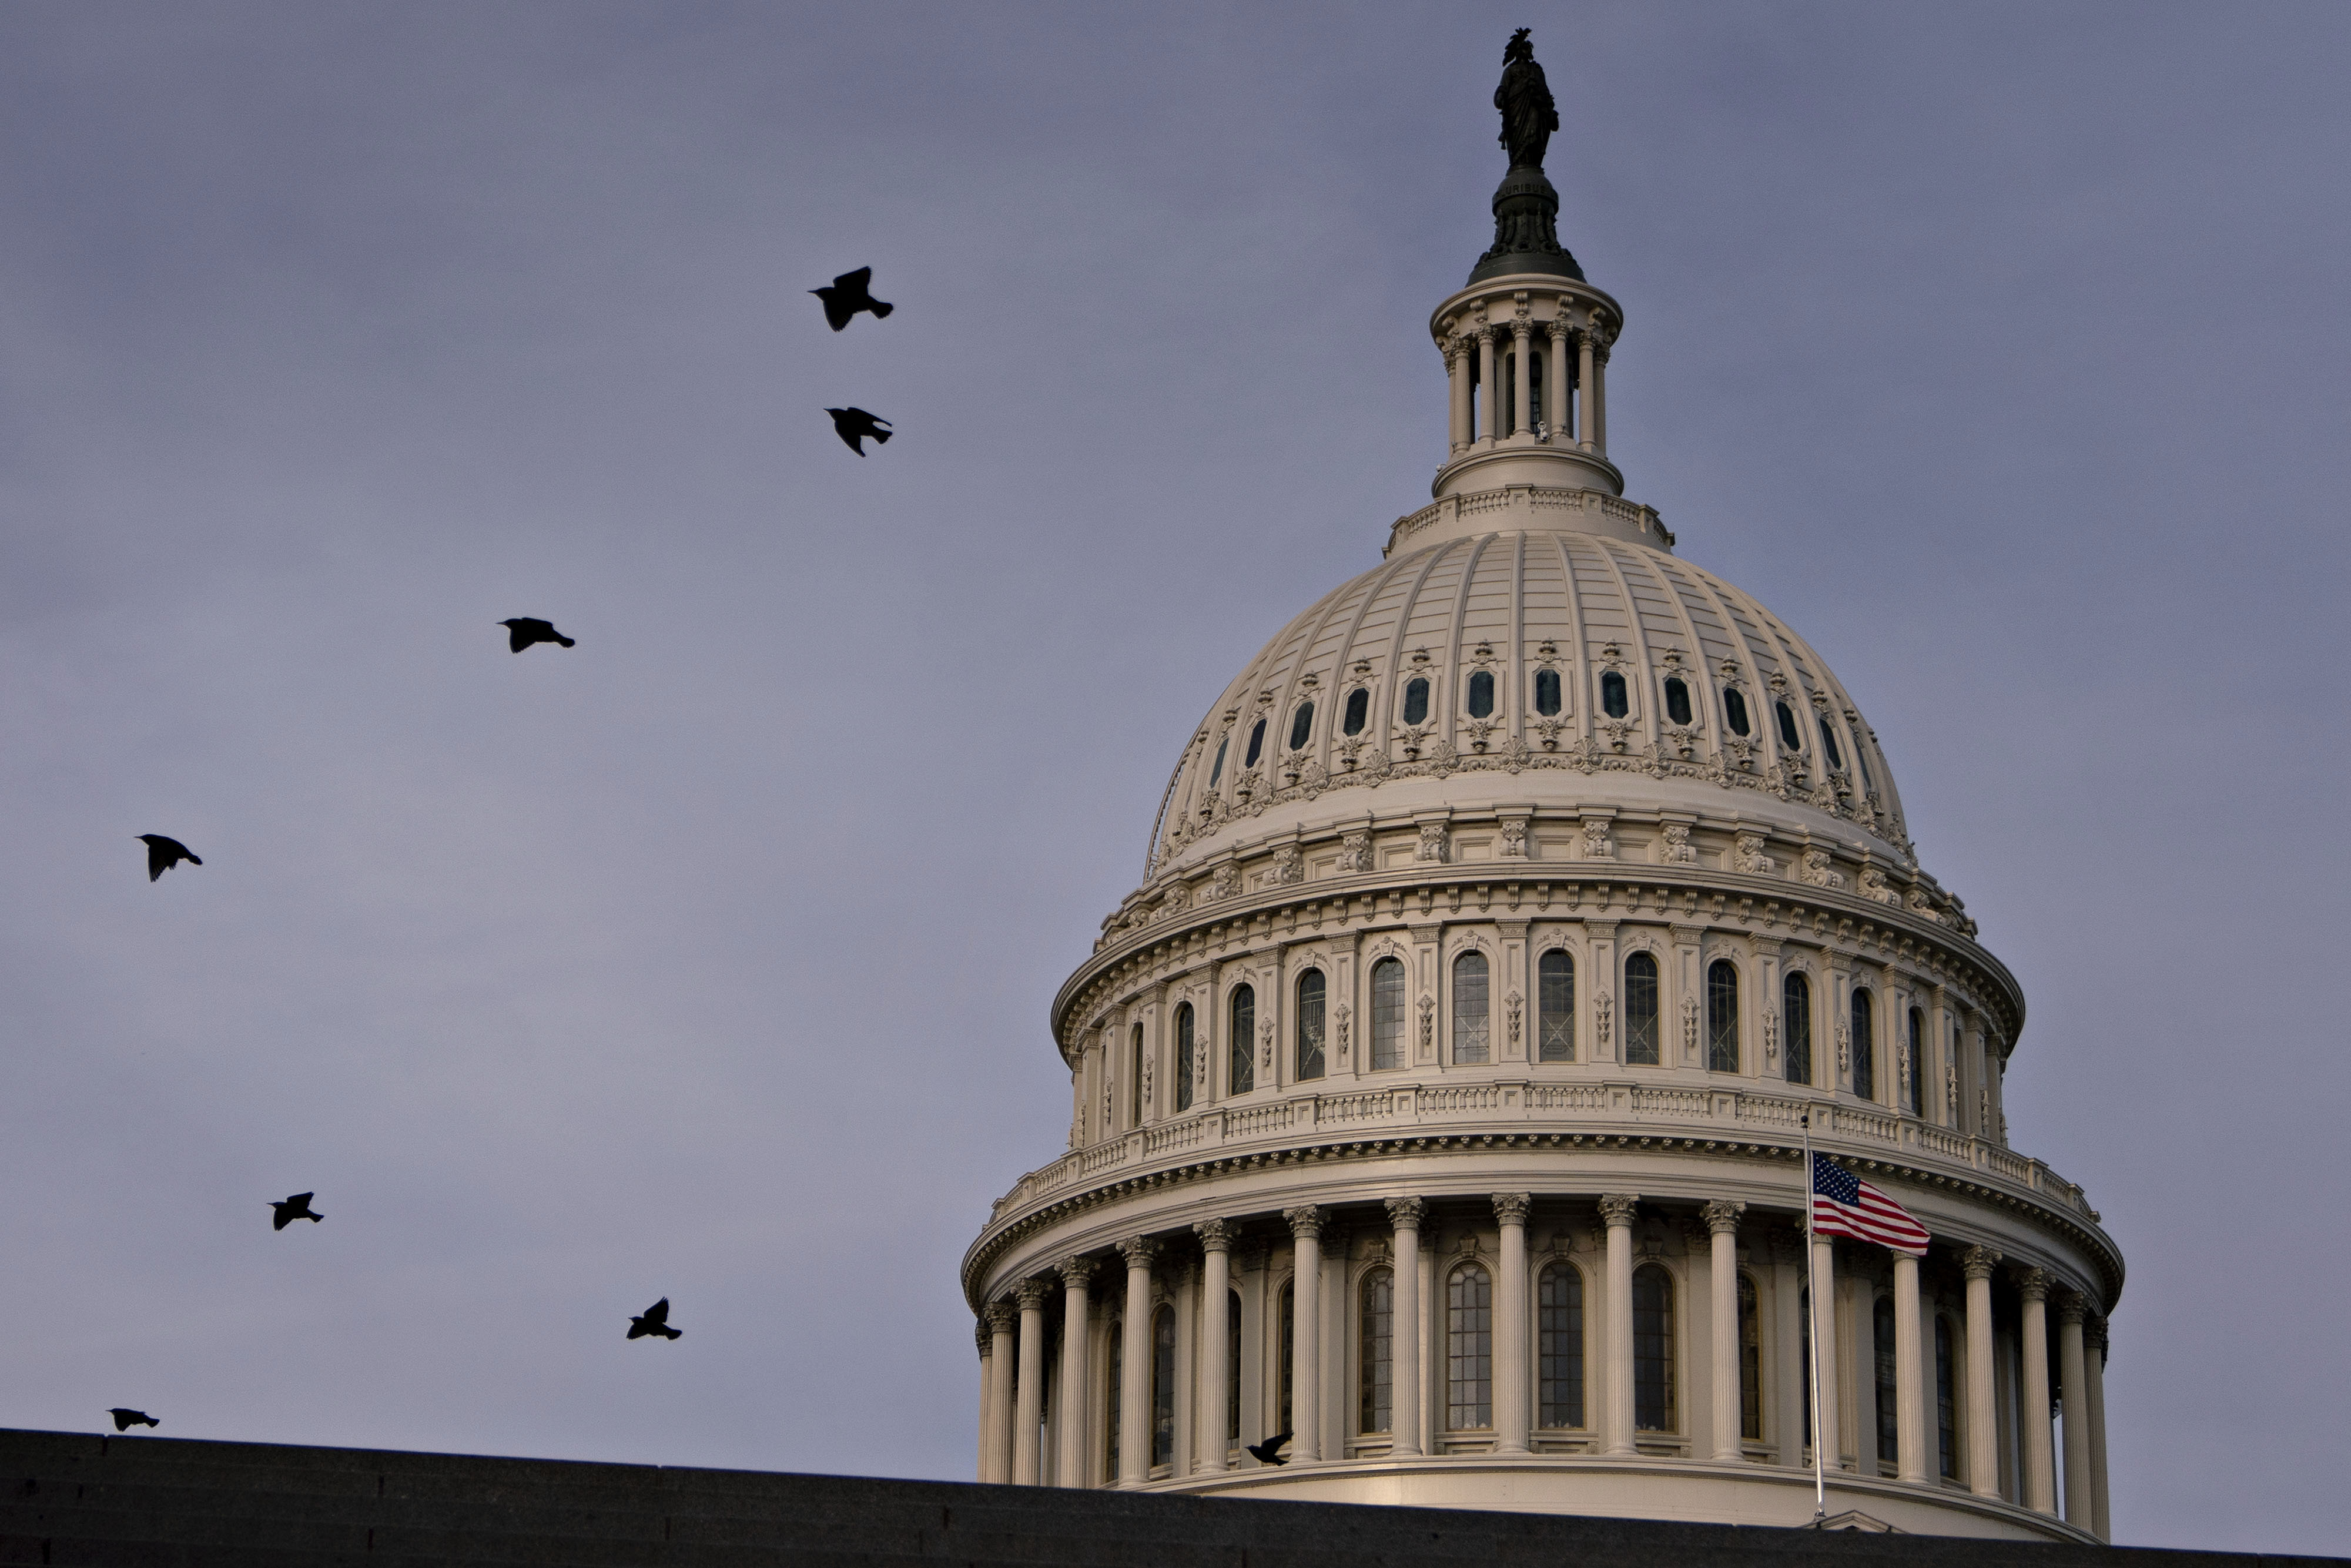 Birds fly near the U.S. Capitol in Washington, D.C.